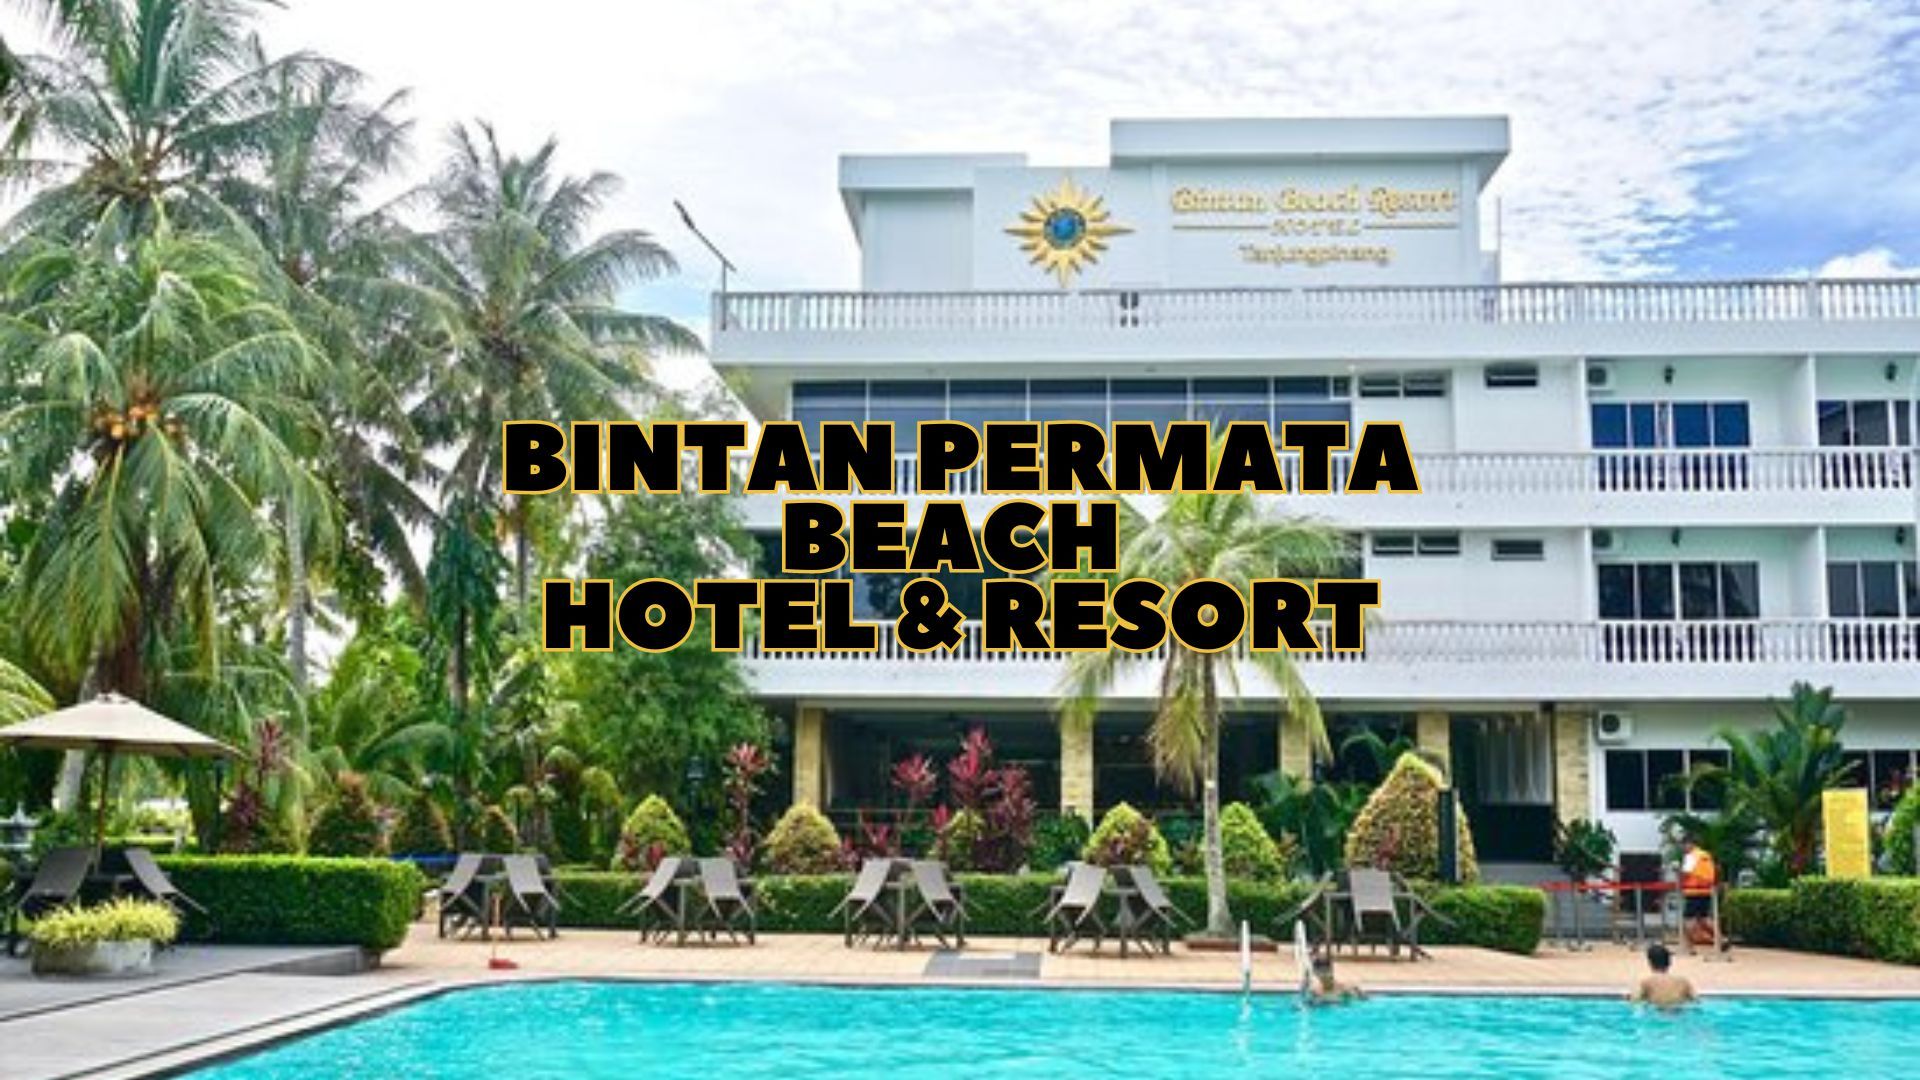 Bintan Permata Beach Hotel & Resort